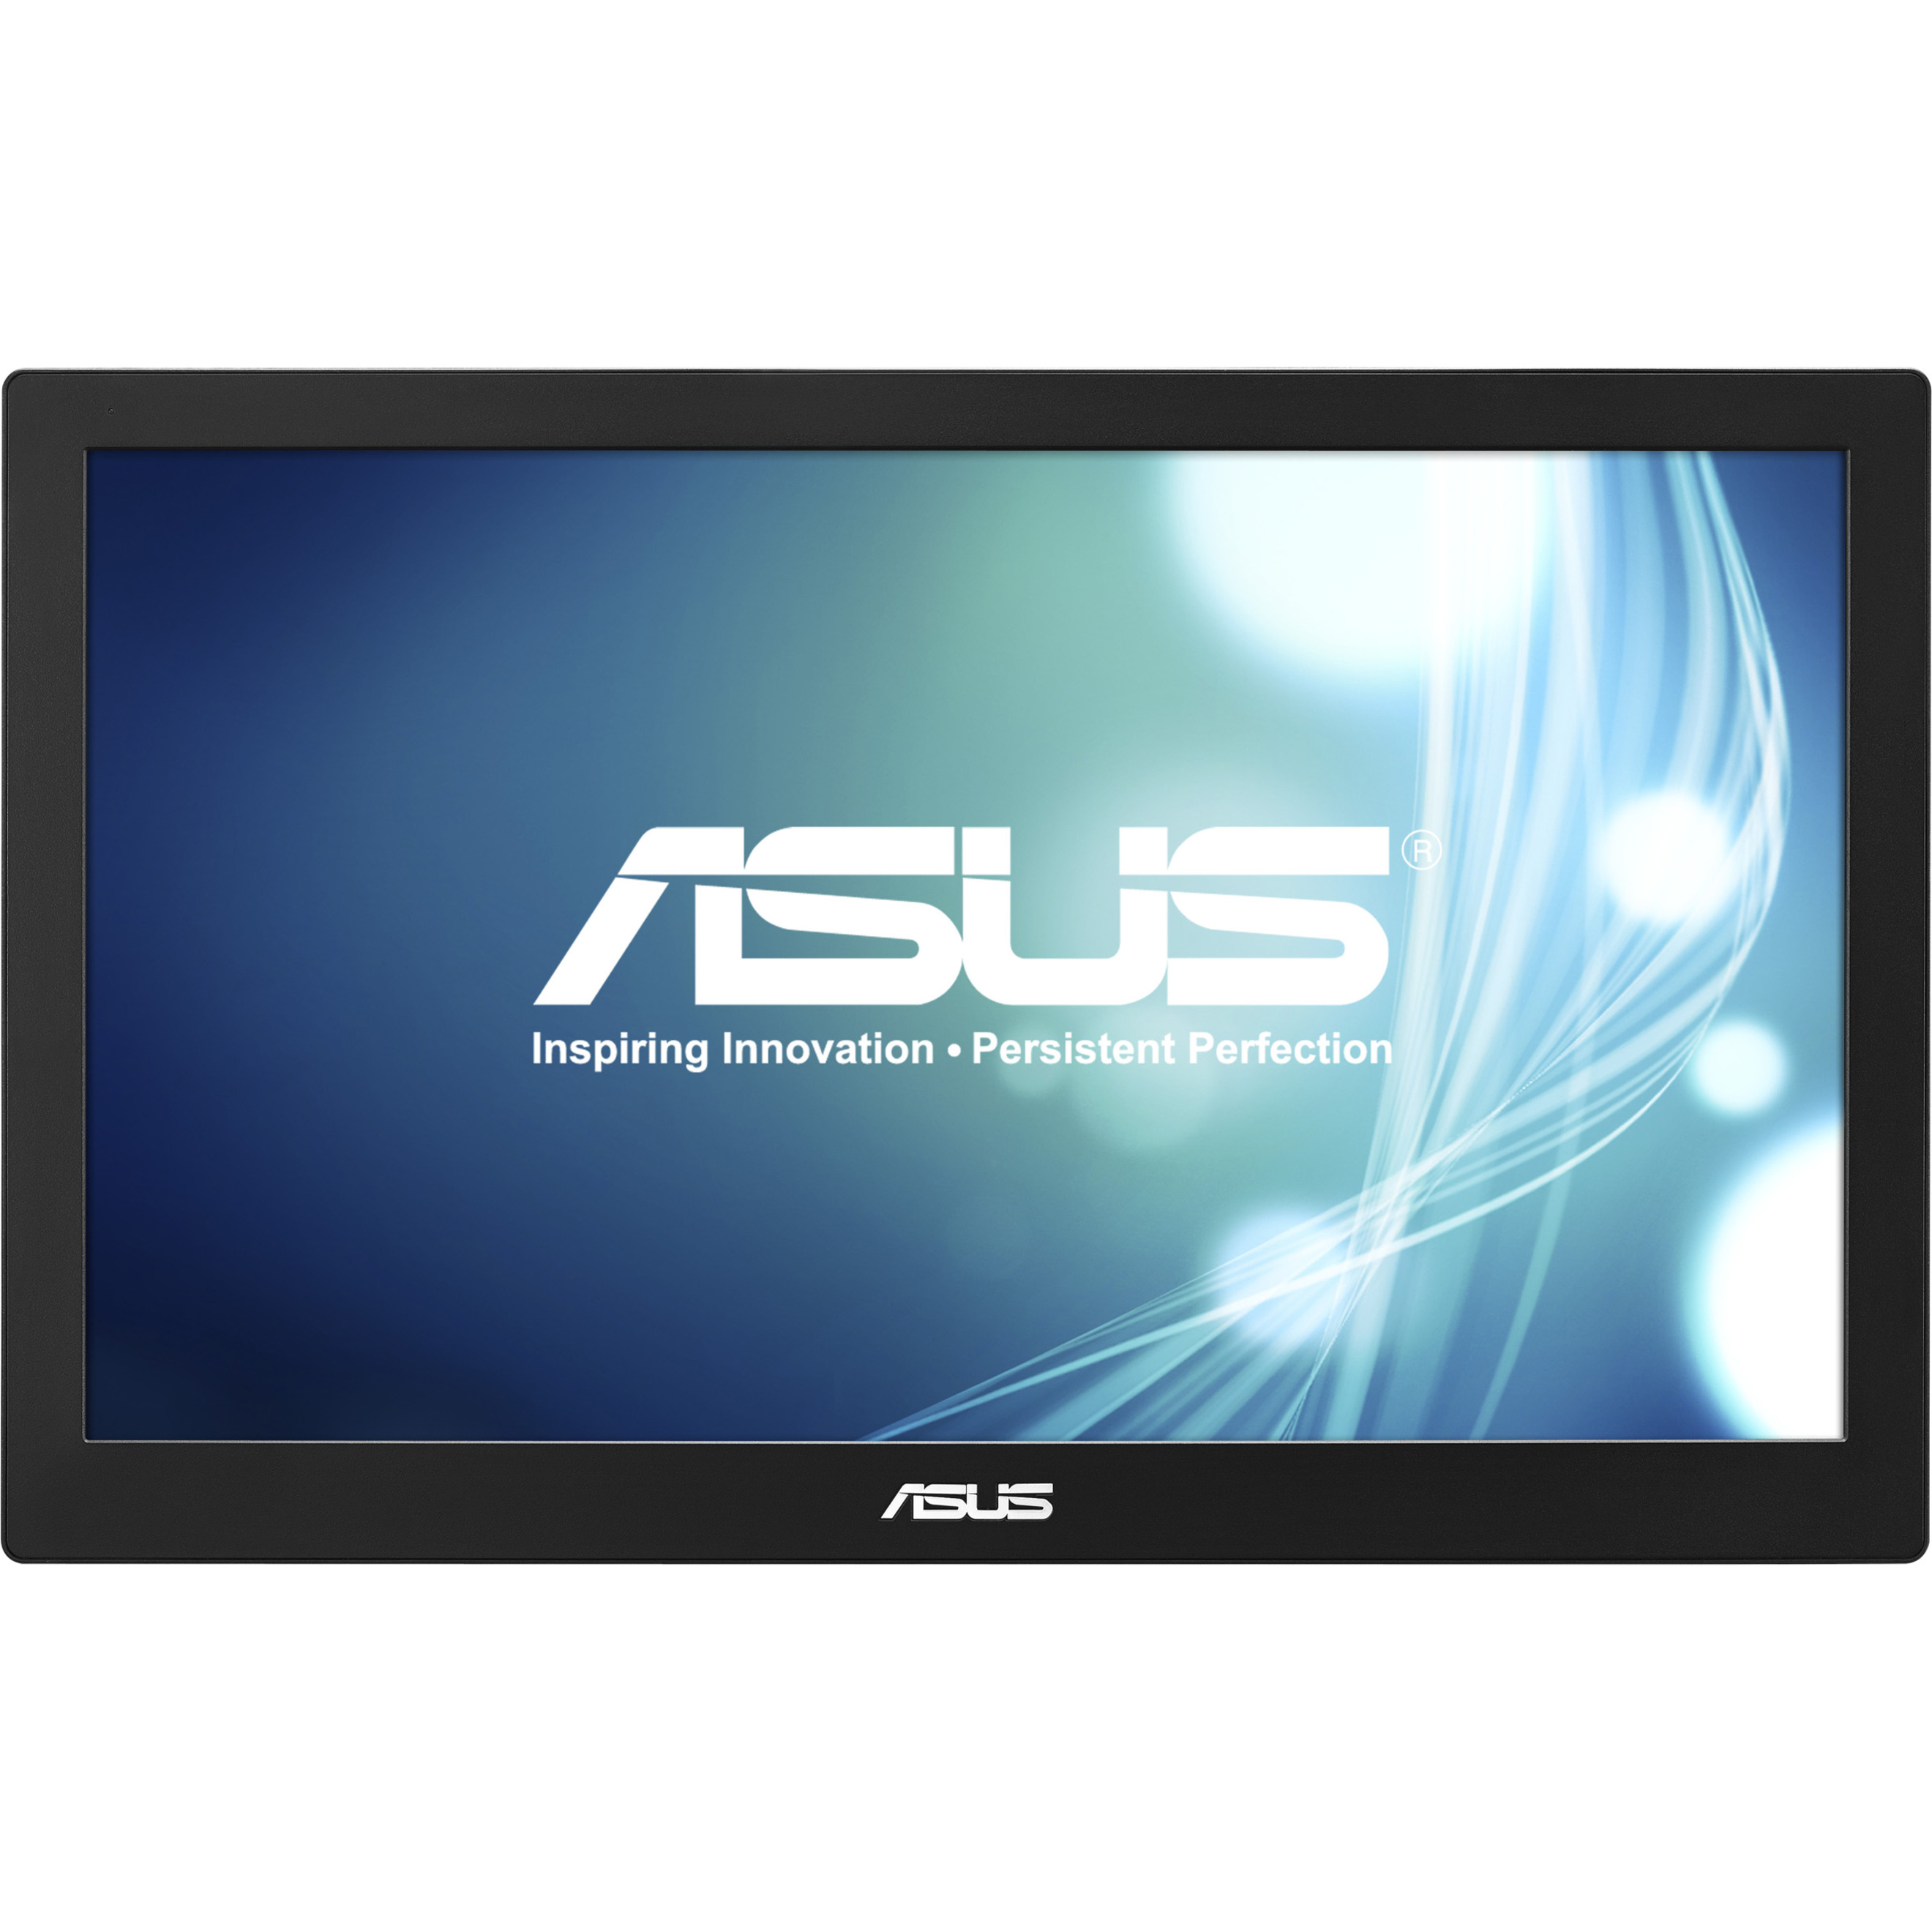 ASUS MB168B Portable Monitor 15.6 - image 1 of 6